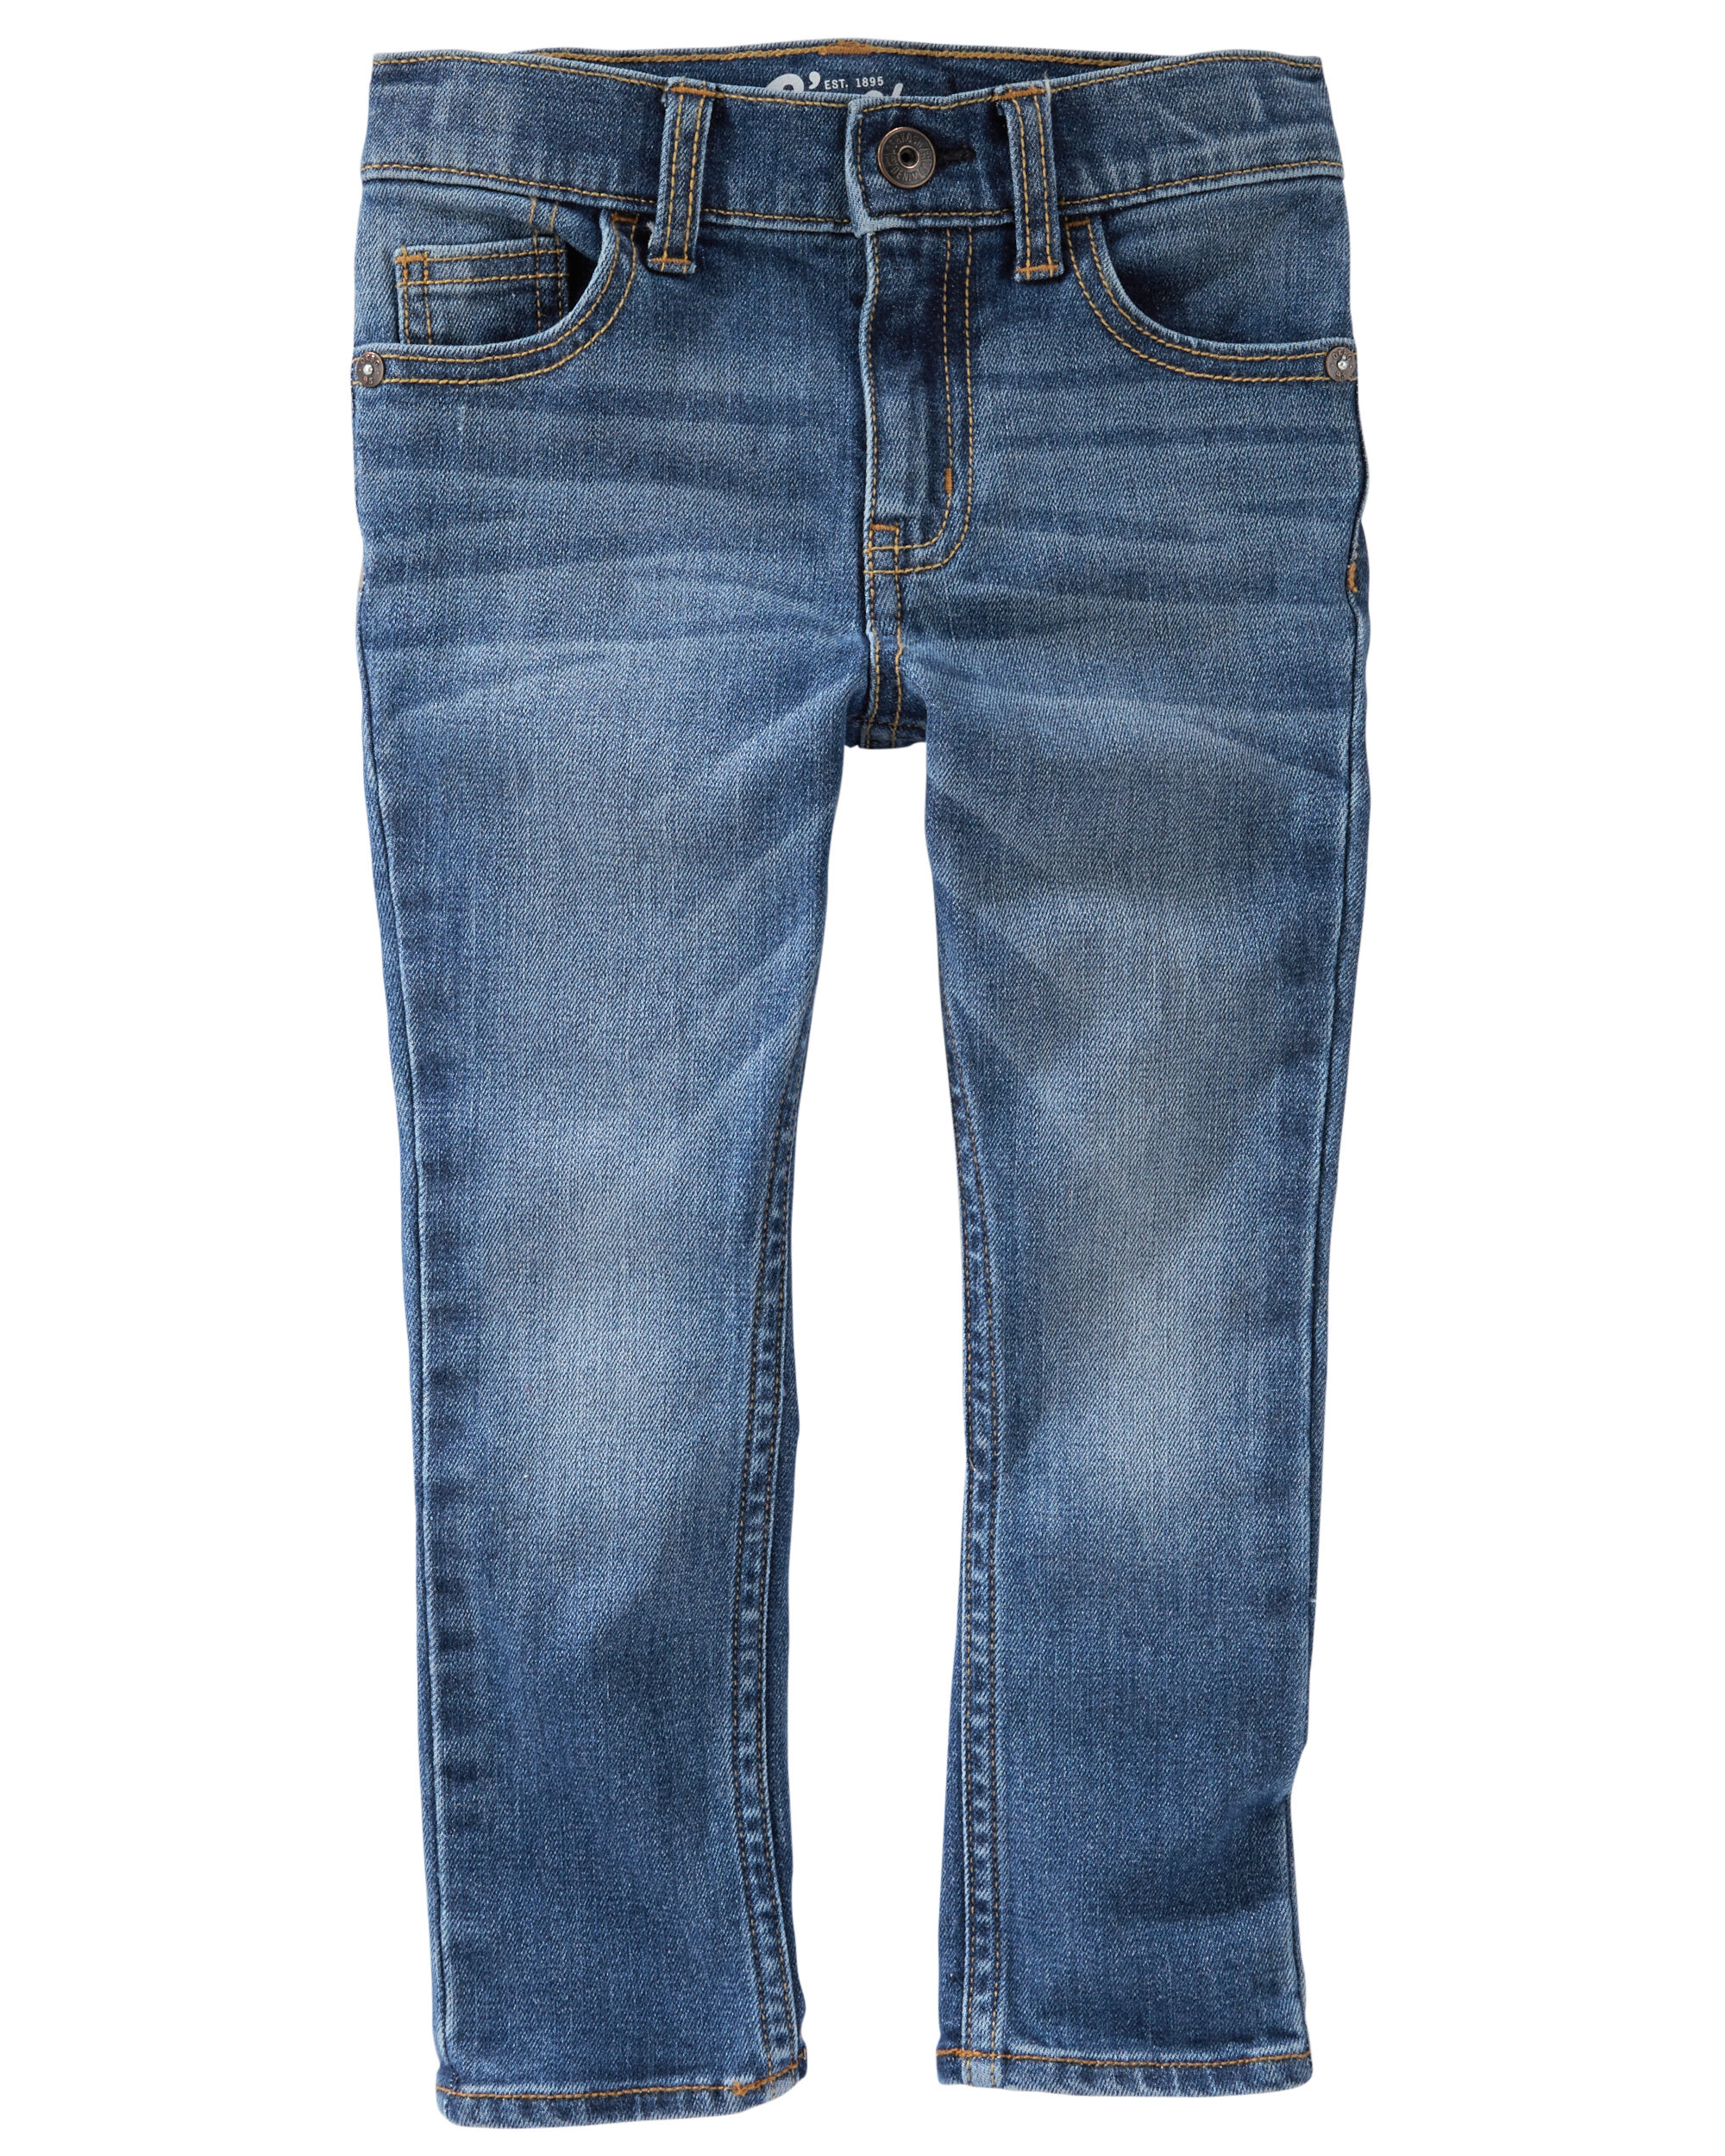 Skinny Jeans - Indigo Bright | OshKosh.com